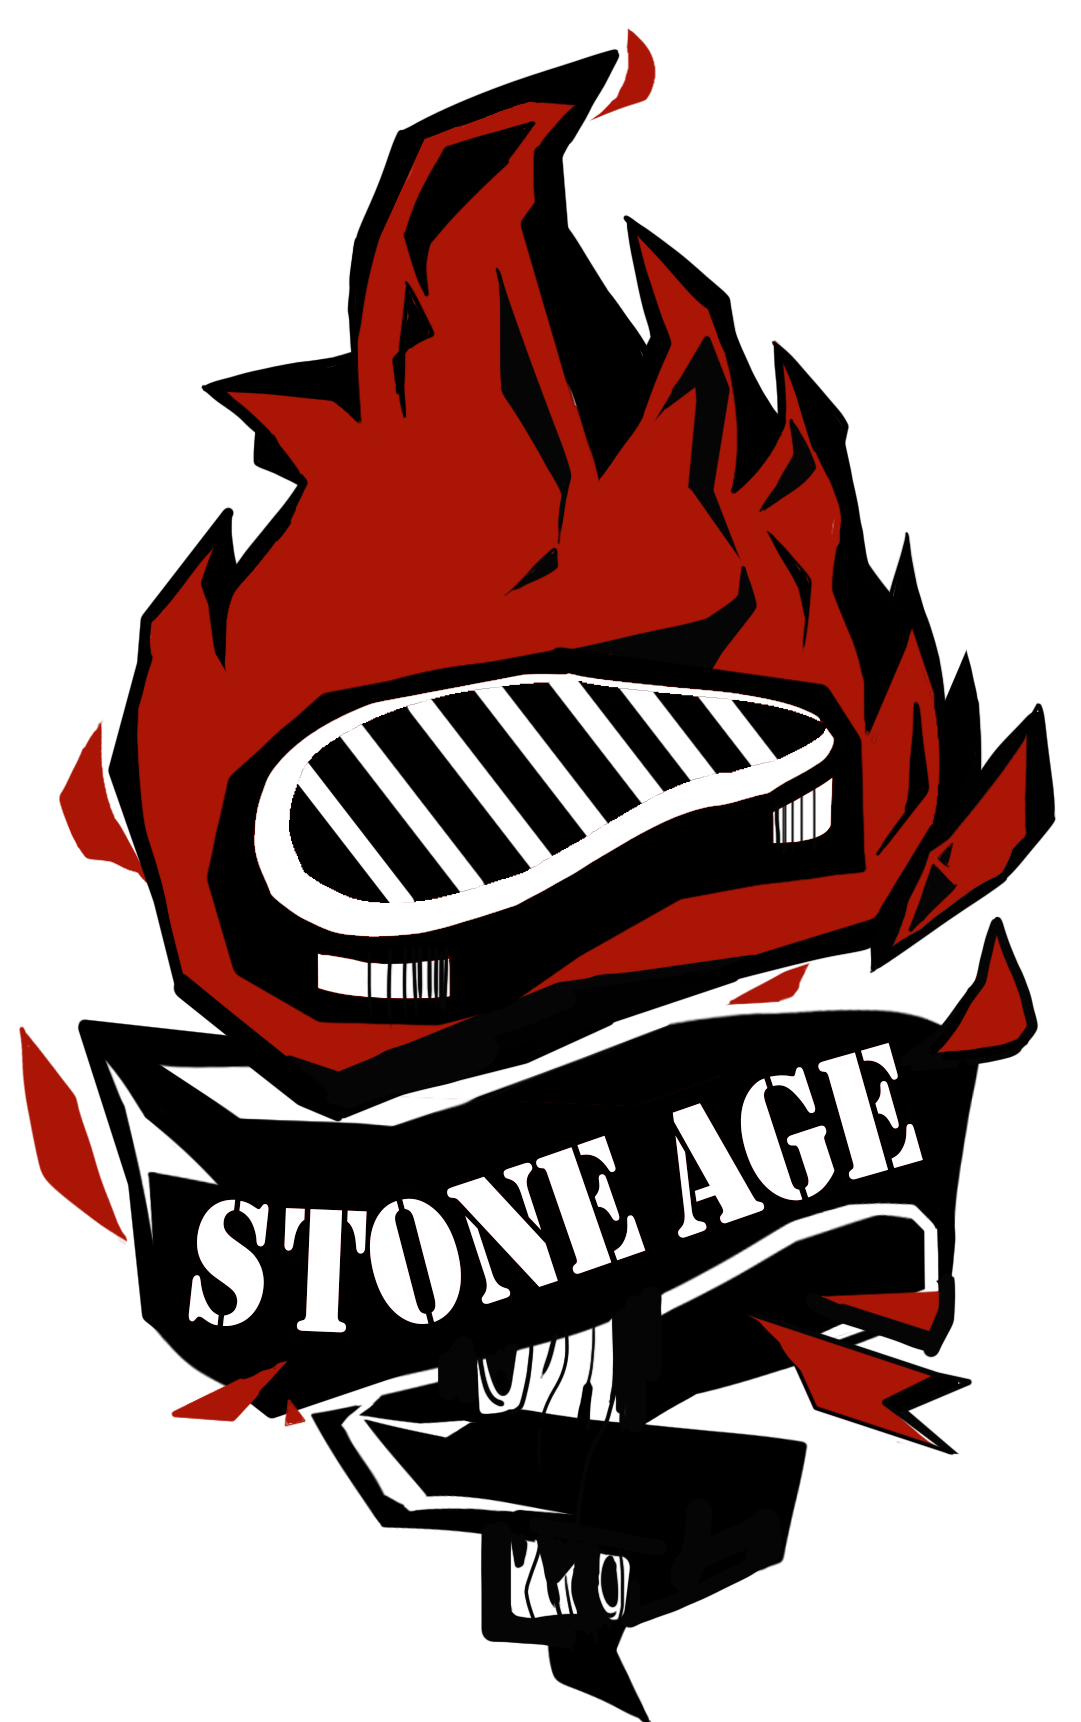 Stoneage石器時代